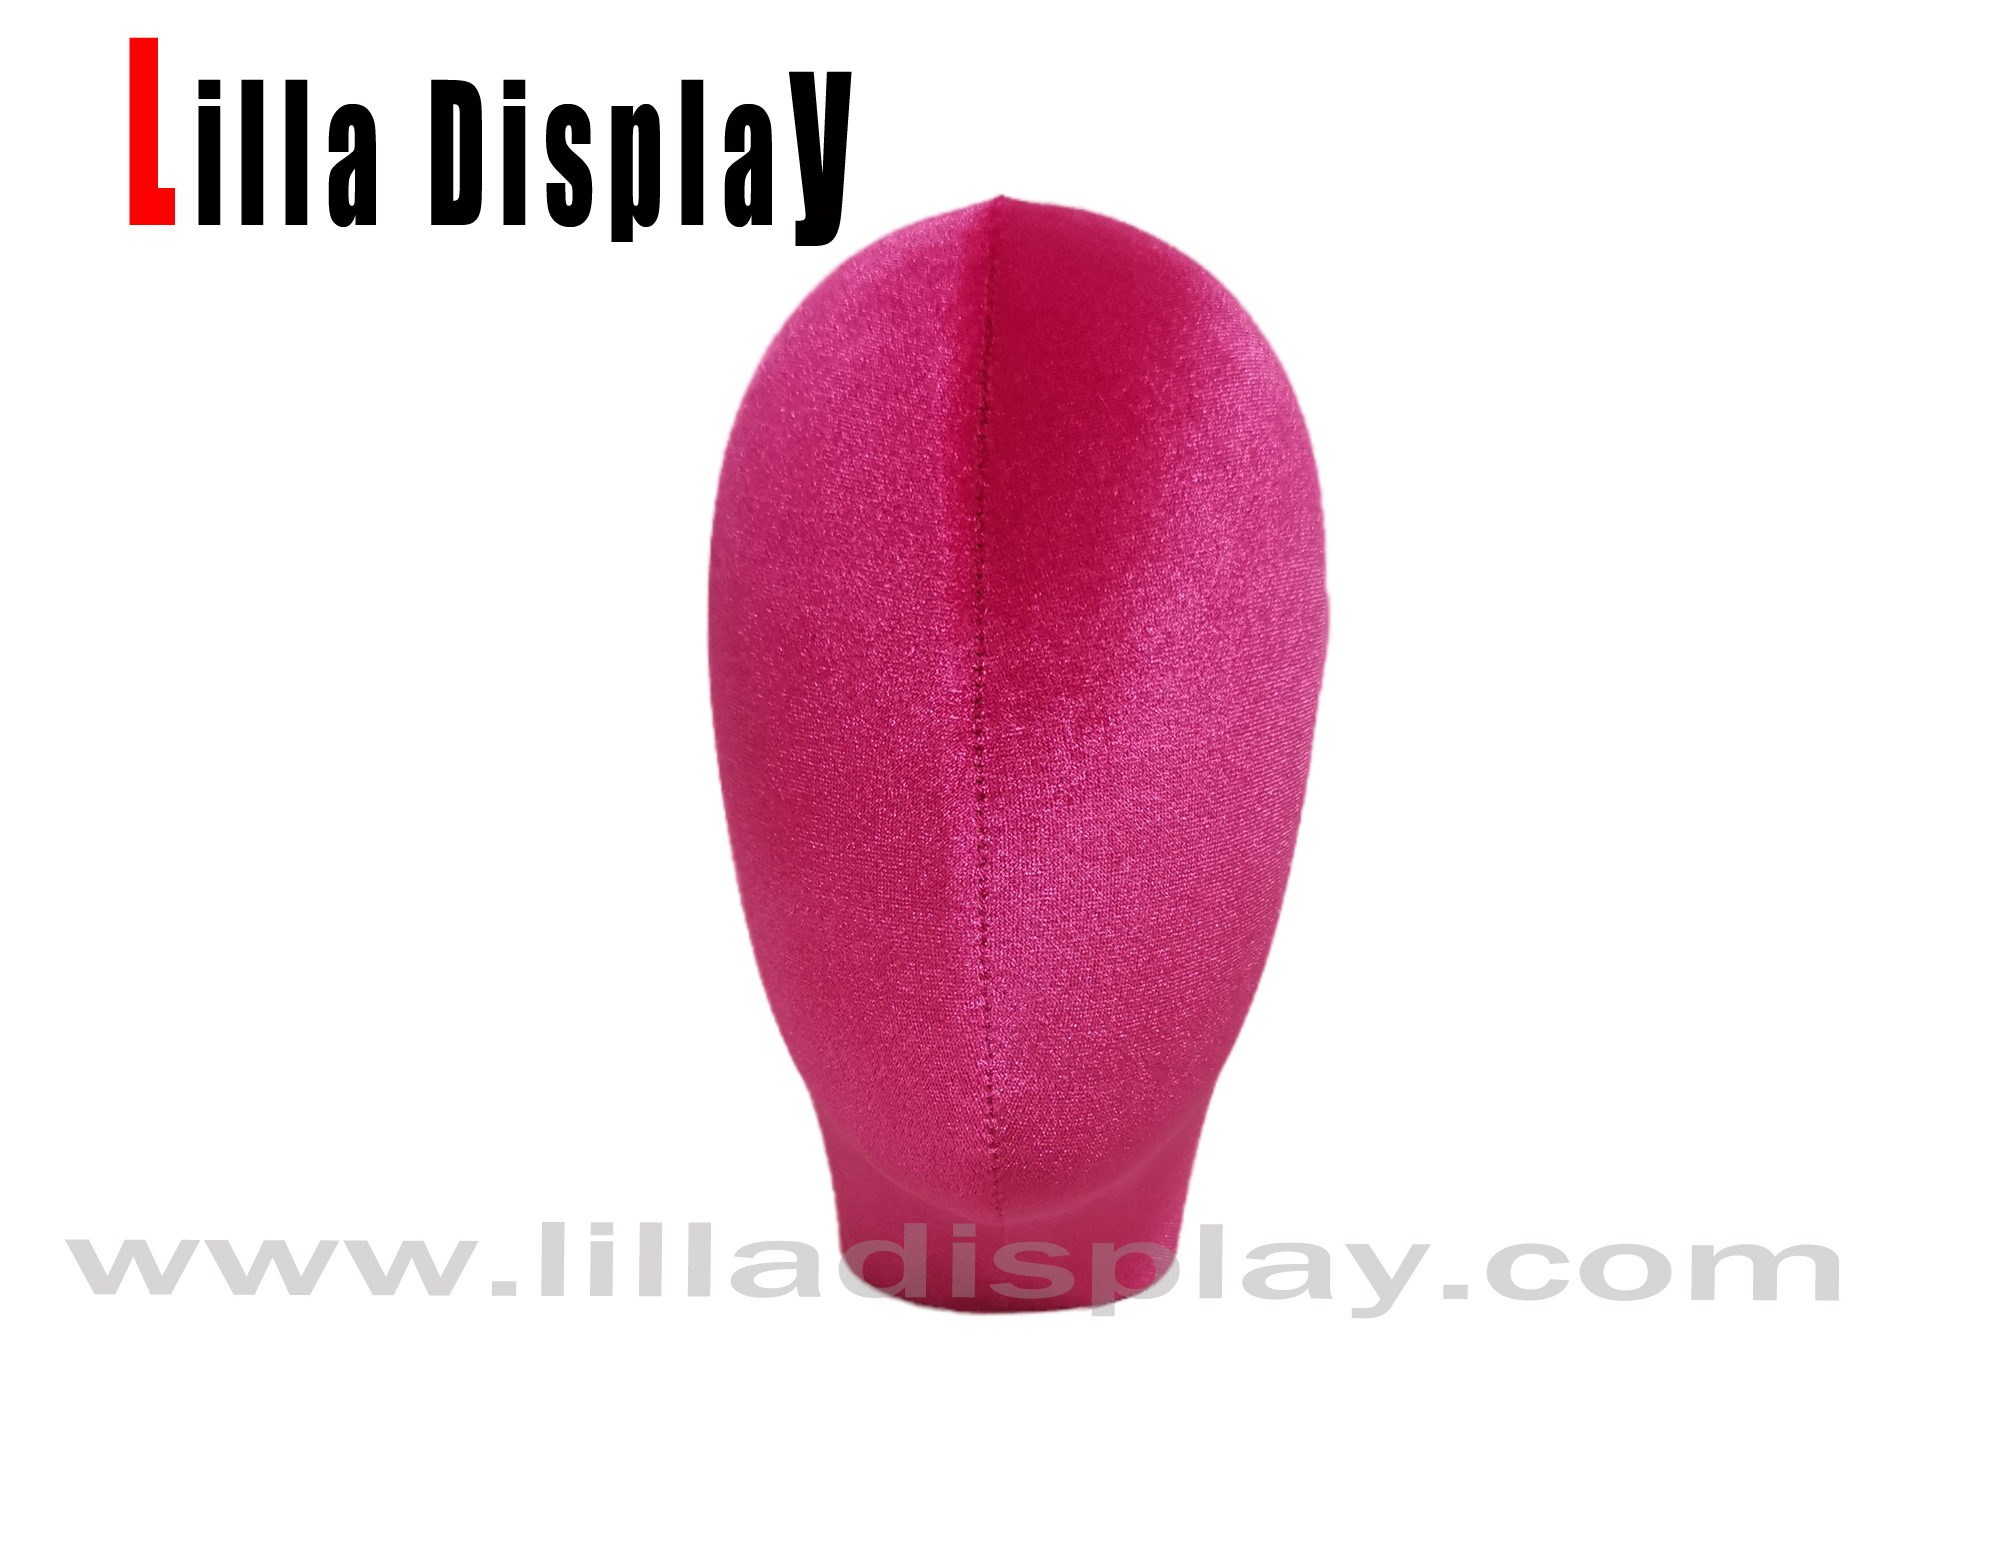 liladisplay สีชมพูร้อน 38 usd หุ่นนางแบบหญิง lucy สำหรับแสดงผ้าโพกหัว